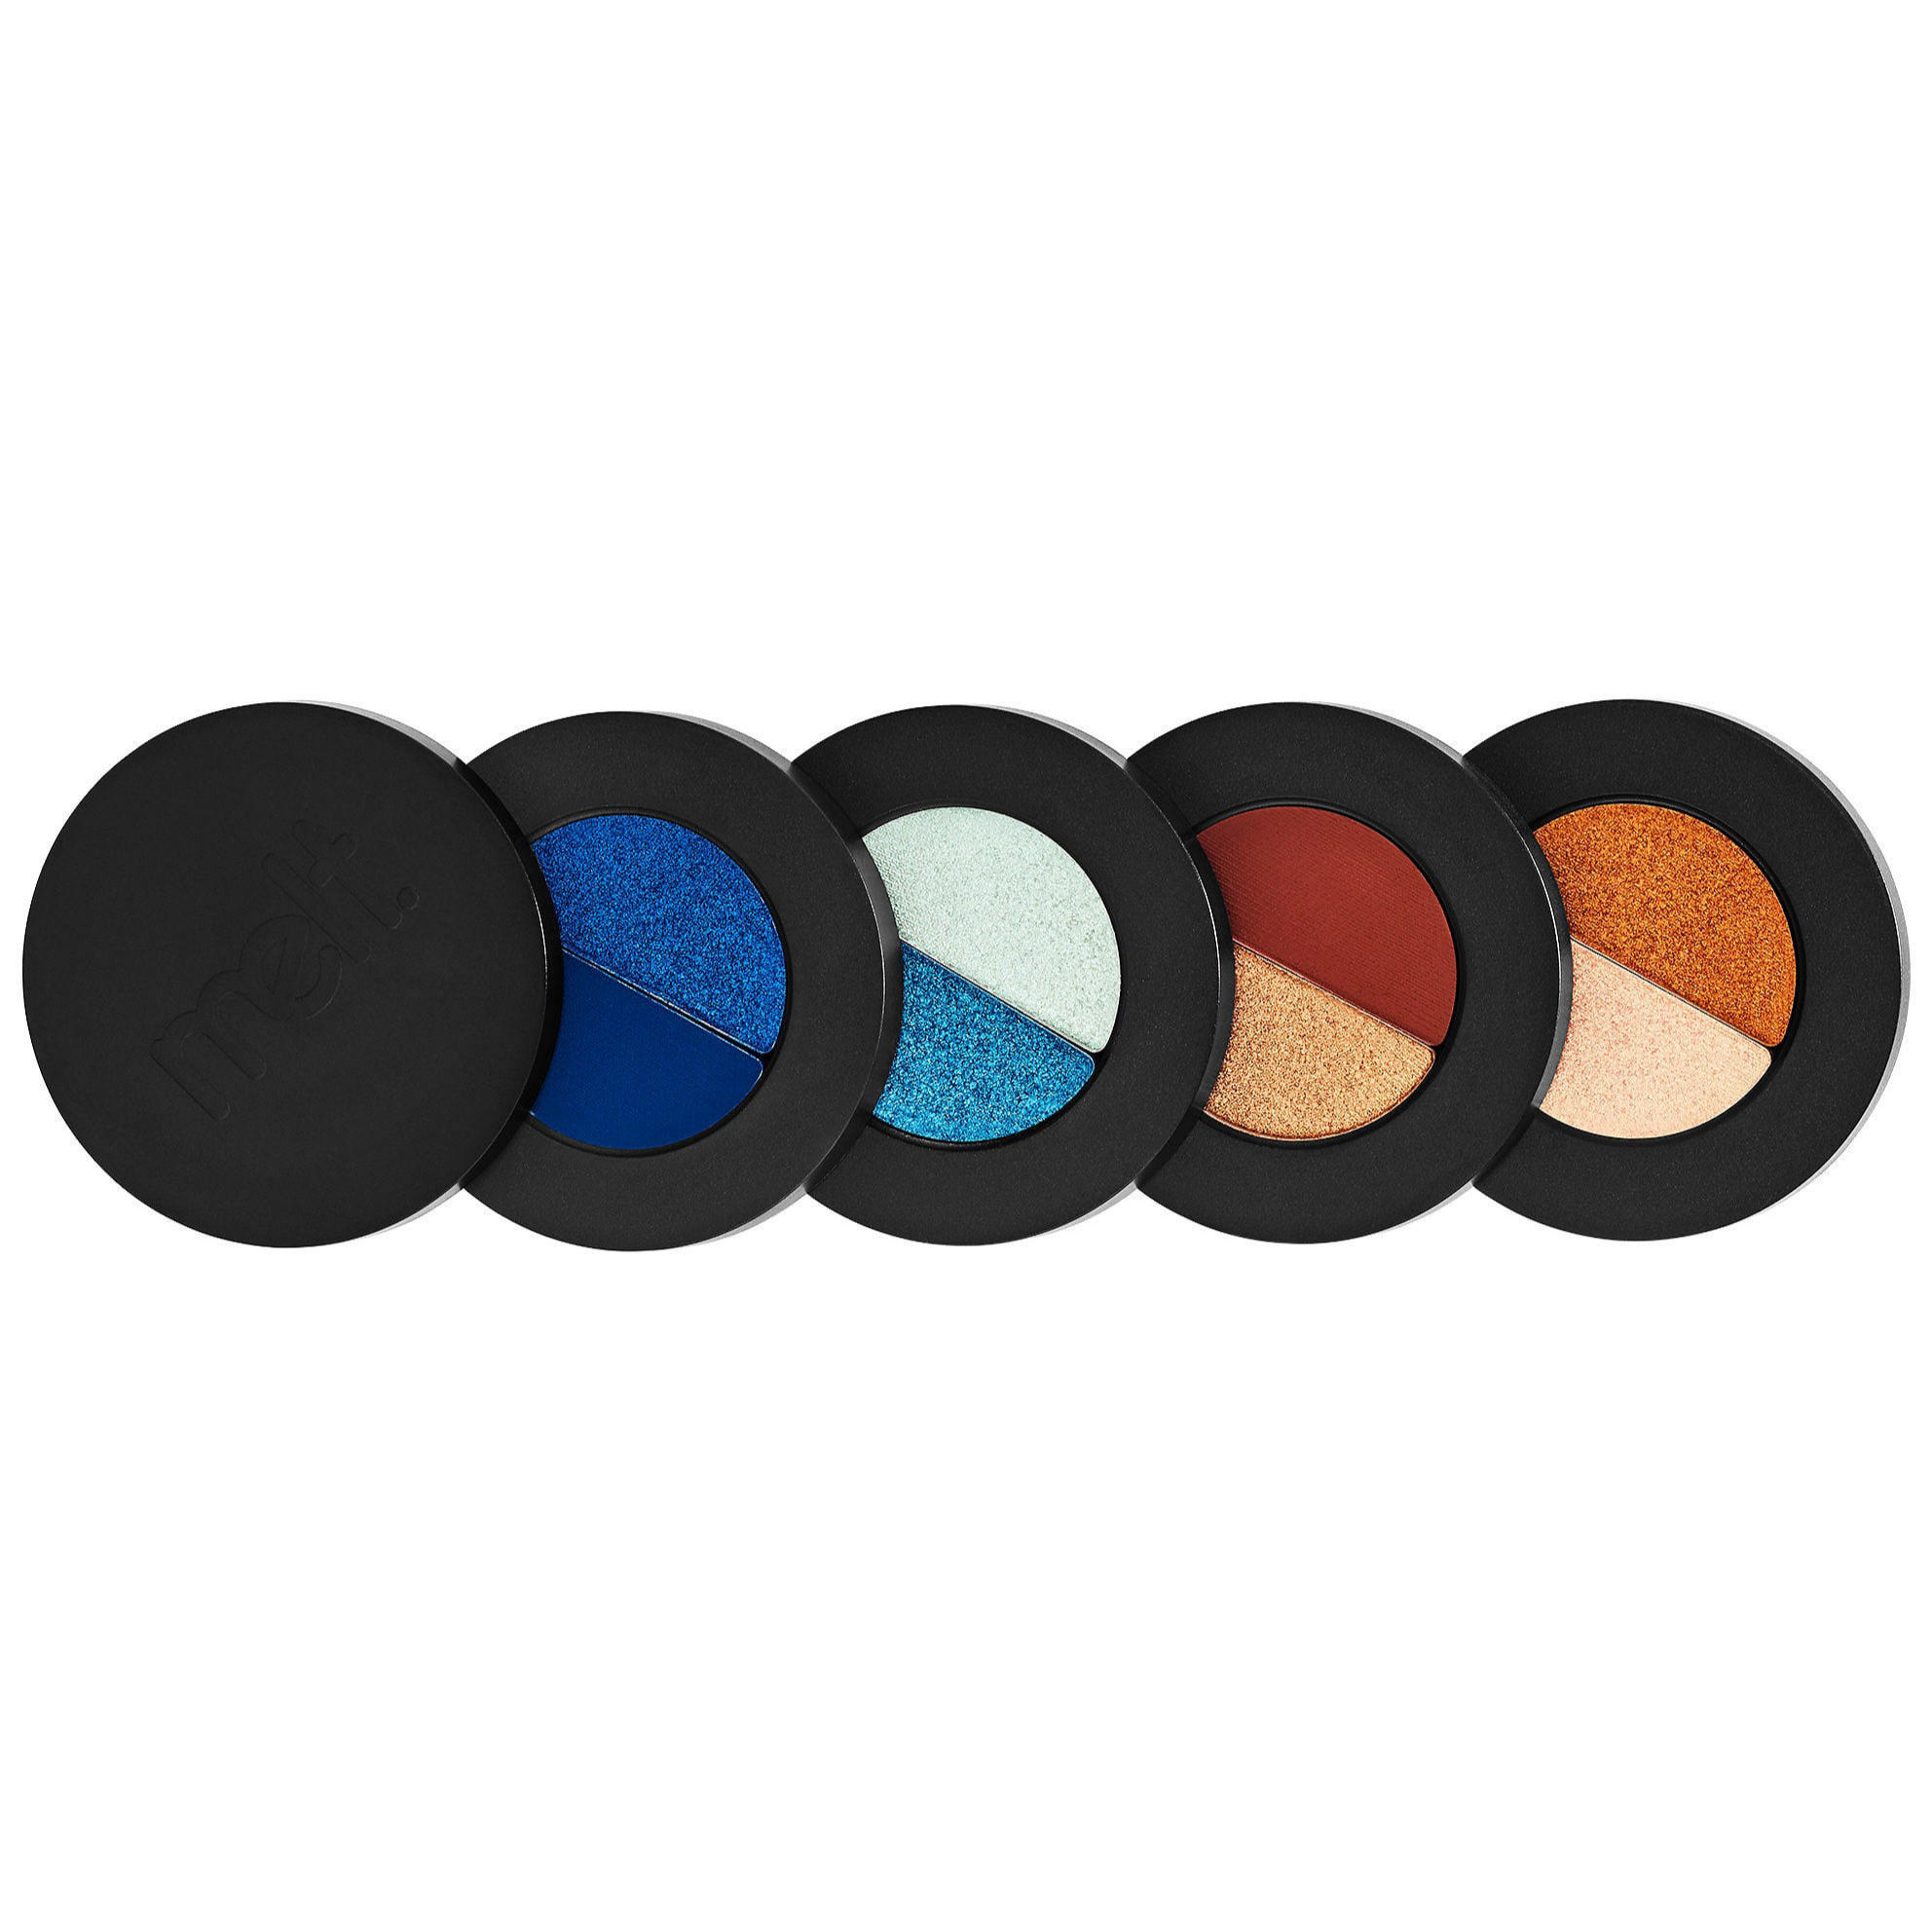 Melt Cosmetics Blueprint Eyeshadow Palette Stack